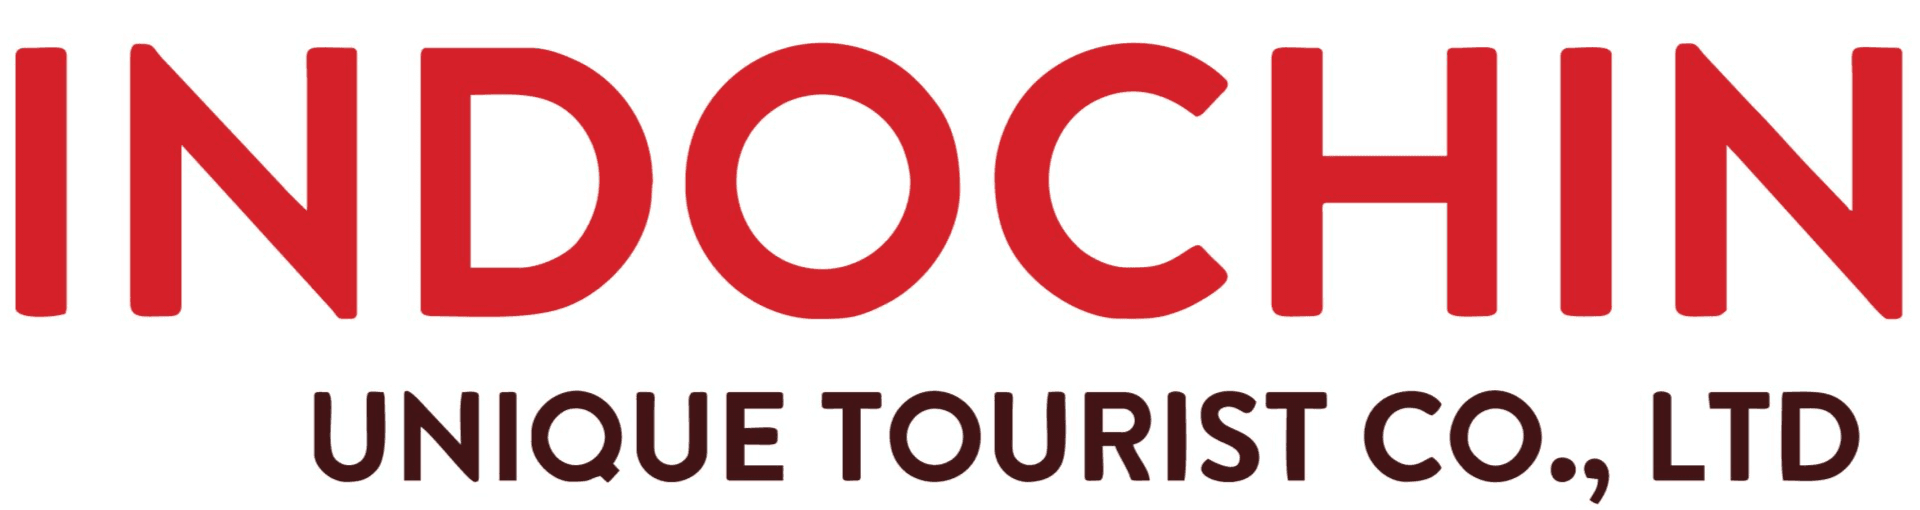 INDOCHINA UNIQUE TOURIST CO.,LTD